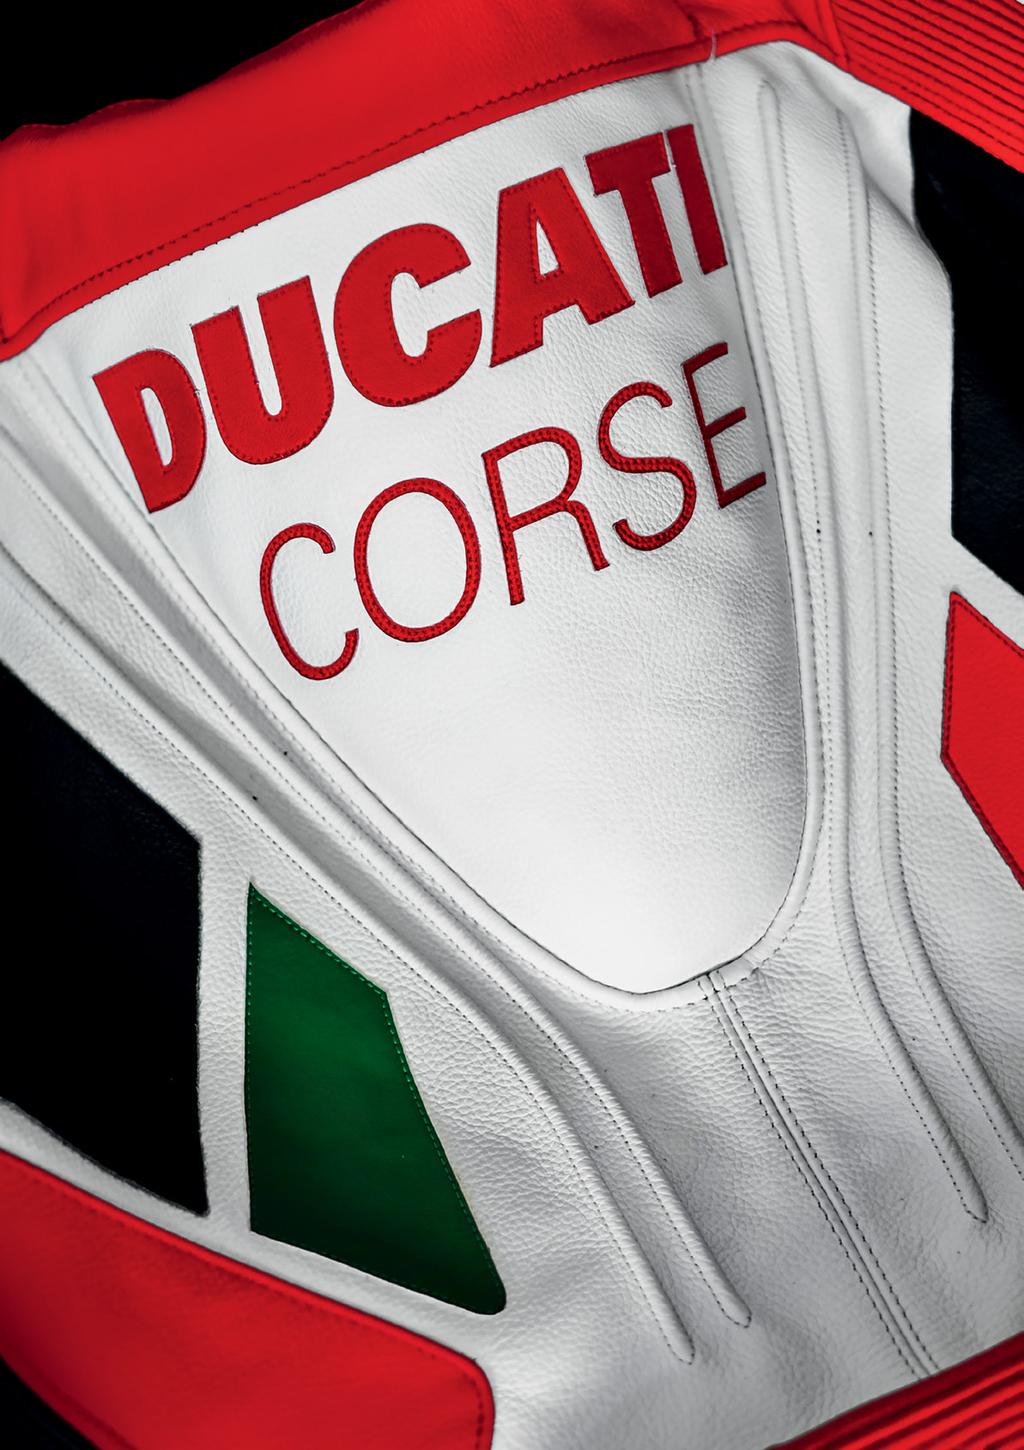 Ducati Corse C3 Tuta intera racing / Racing suit 9810371 perforato / perforated Capo certificato CE. Cat.II - Direttiva 89/686/EEC Liv.2 / CE Certified product. Cat.II - Directive 89/686/EEC Liv.